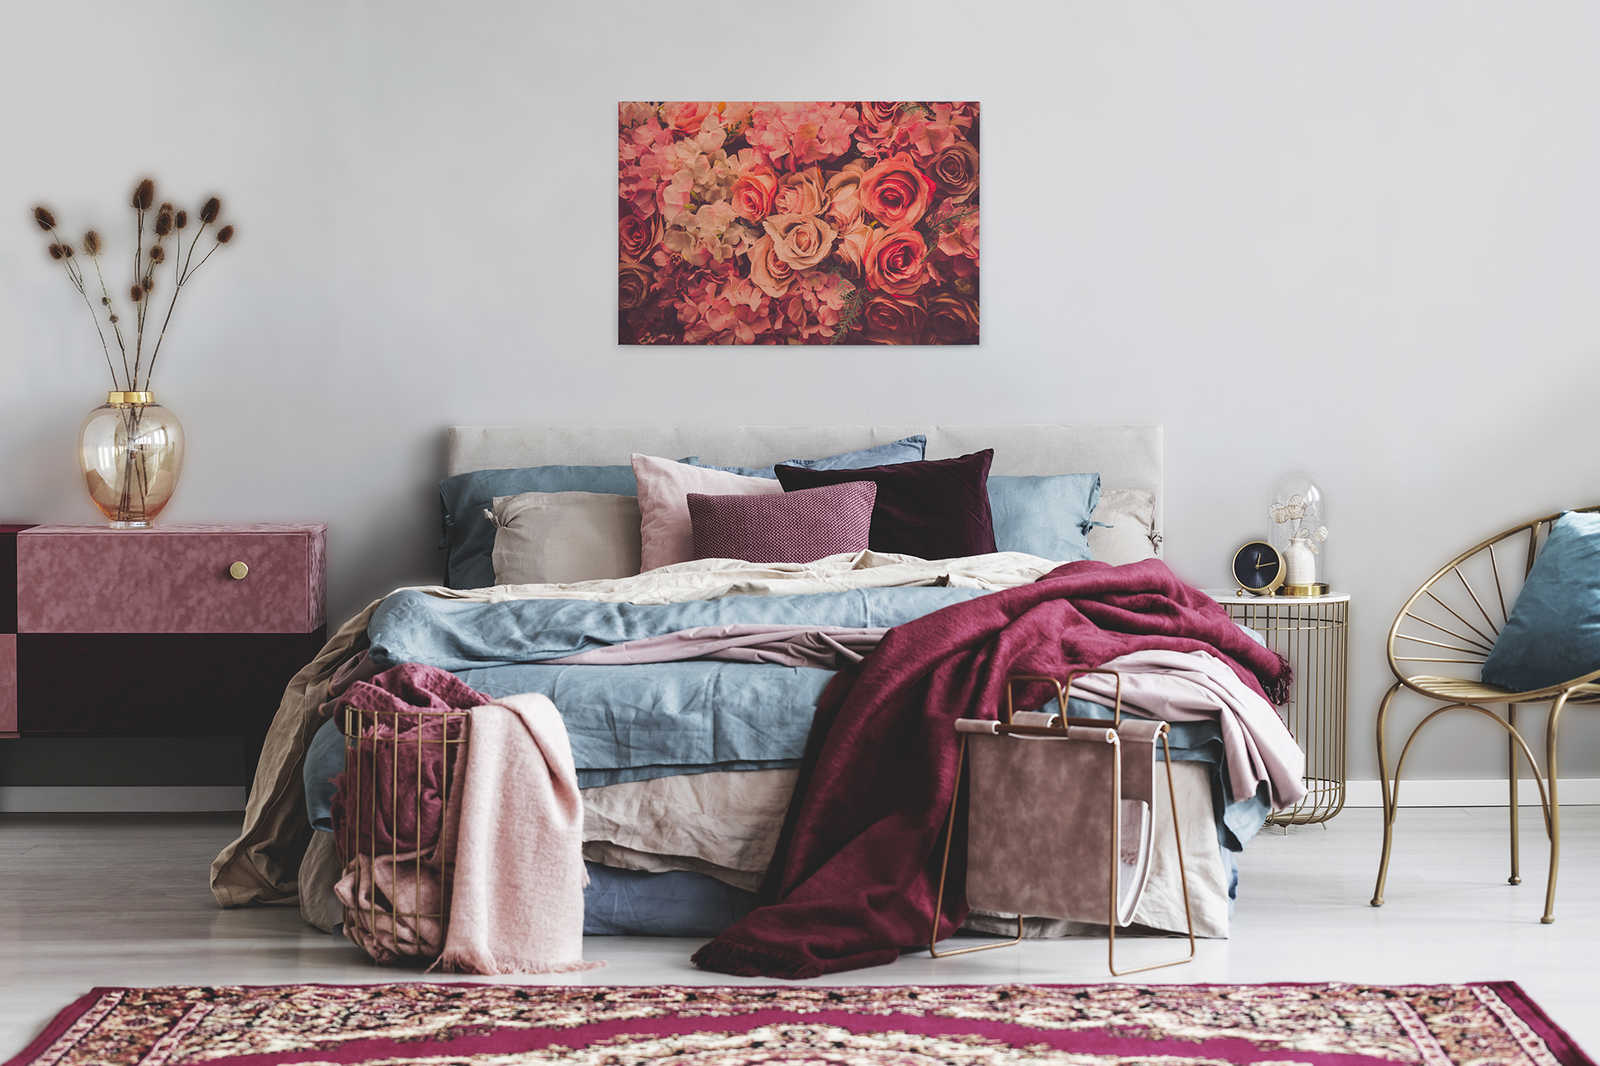             Lienzo con romántico motivo de rosas en aspecto de lino - 0,90 m x 0,60 m
        